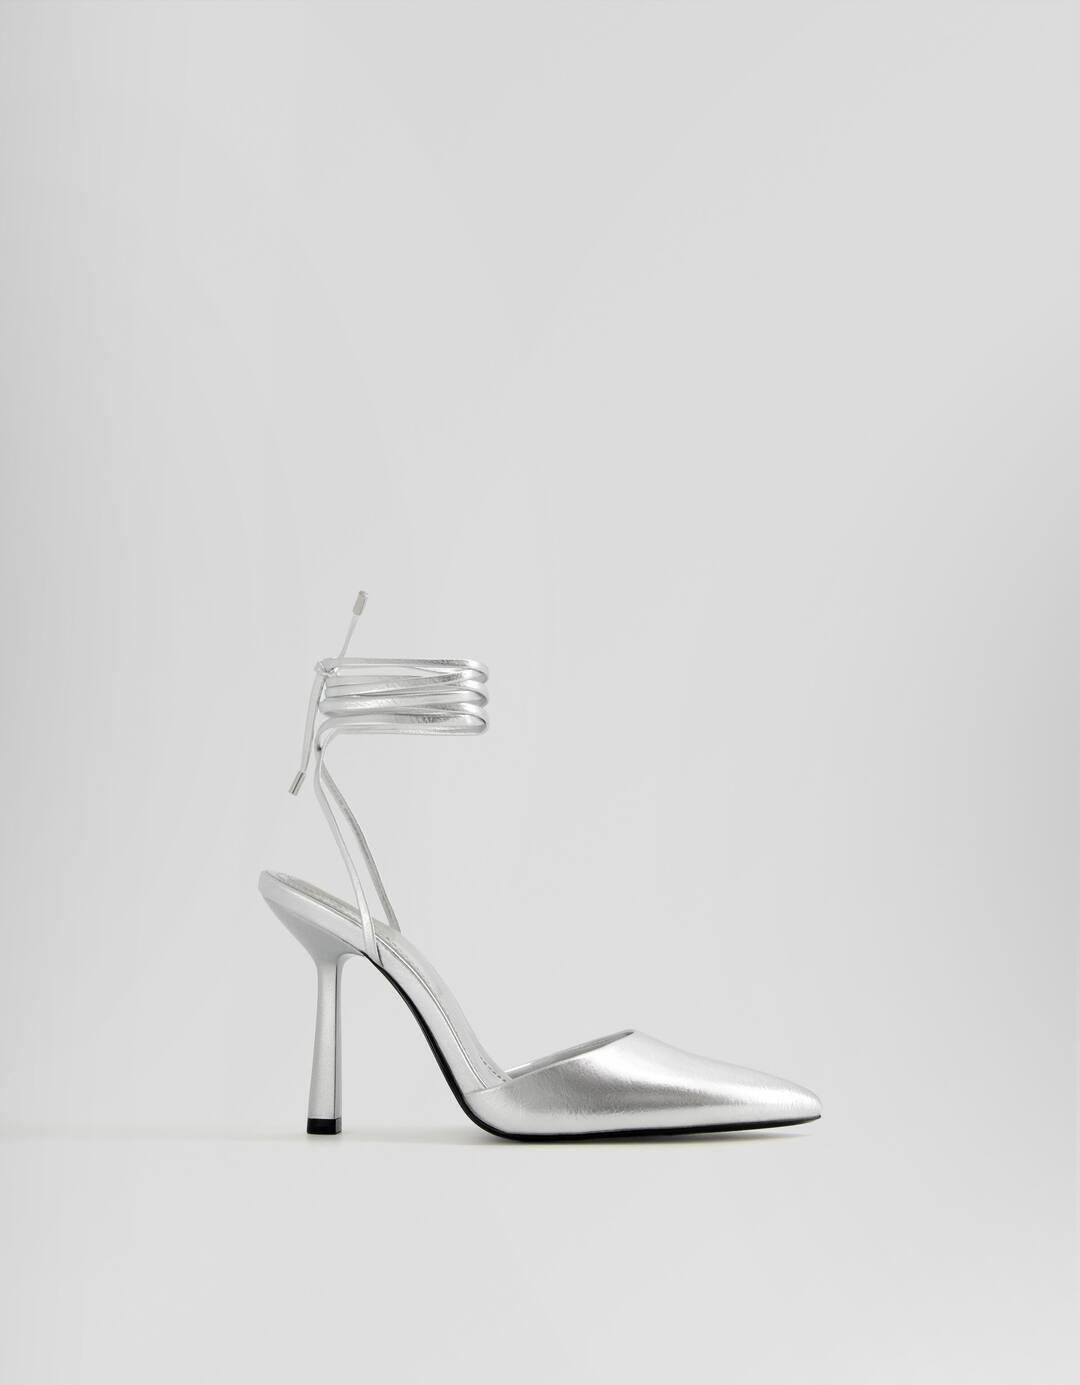 Metallic lace-up high-heel shoes